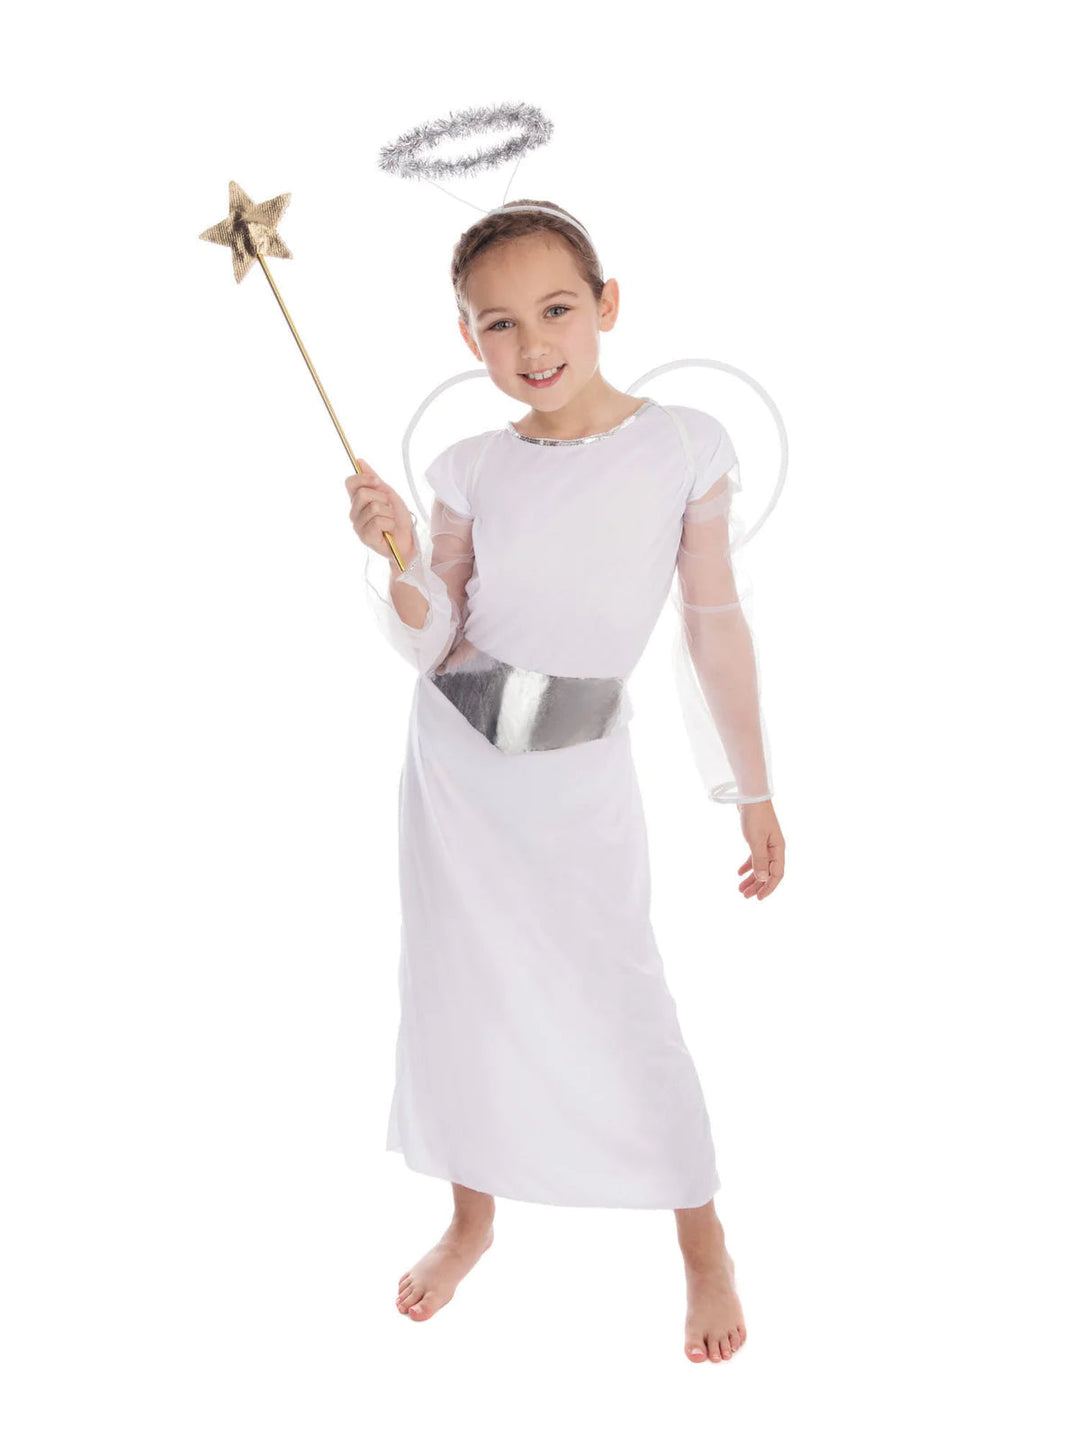 Angel Girls Costume White Angel Dress with Belt